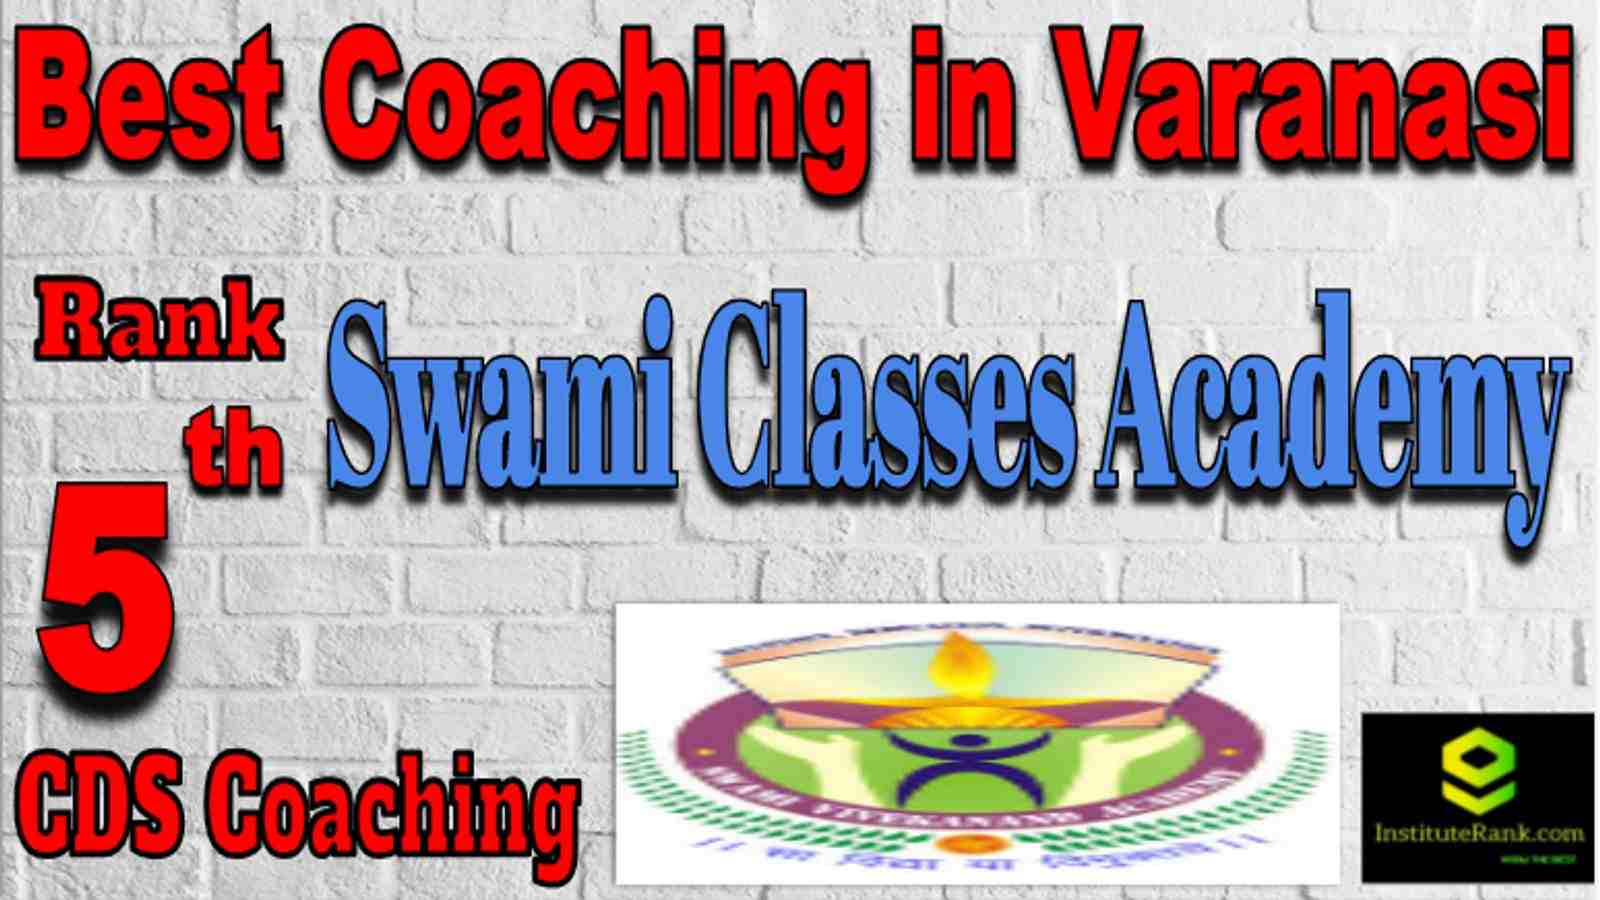 Rank 5 Top CDS Coaching in Varanasi